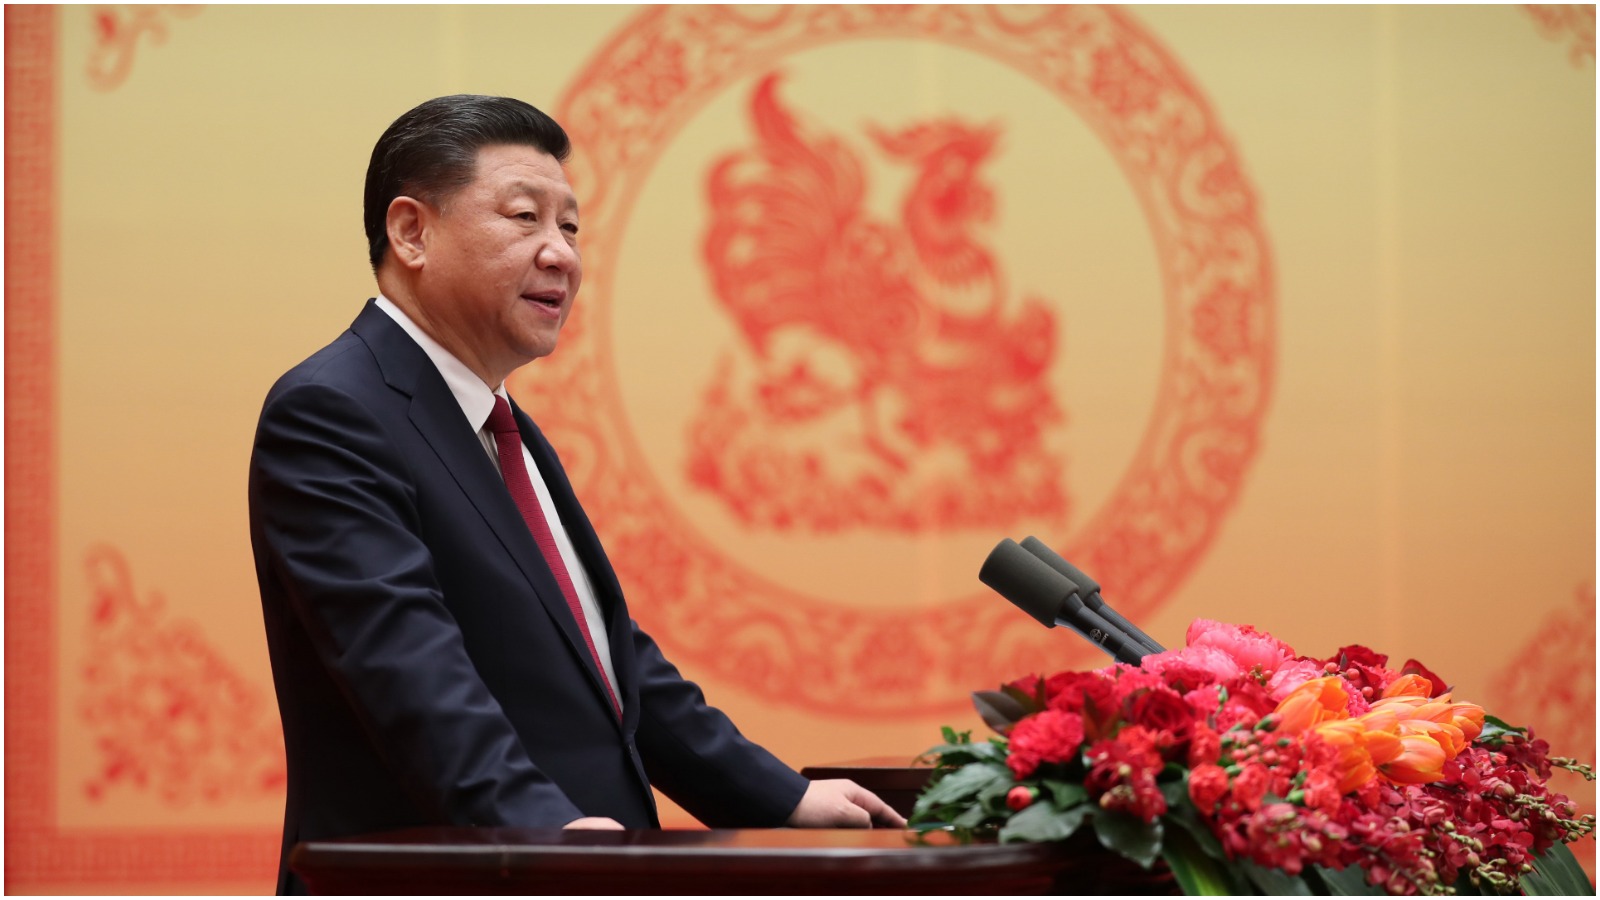 Jonas Stengaard Jensen: Kinas leder er ved at skabe Xi-dynastiet